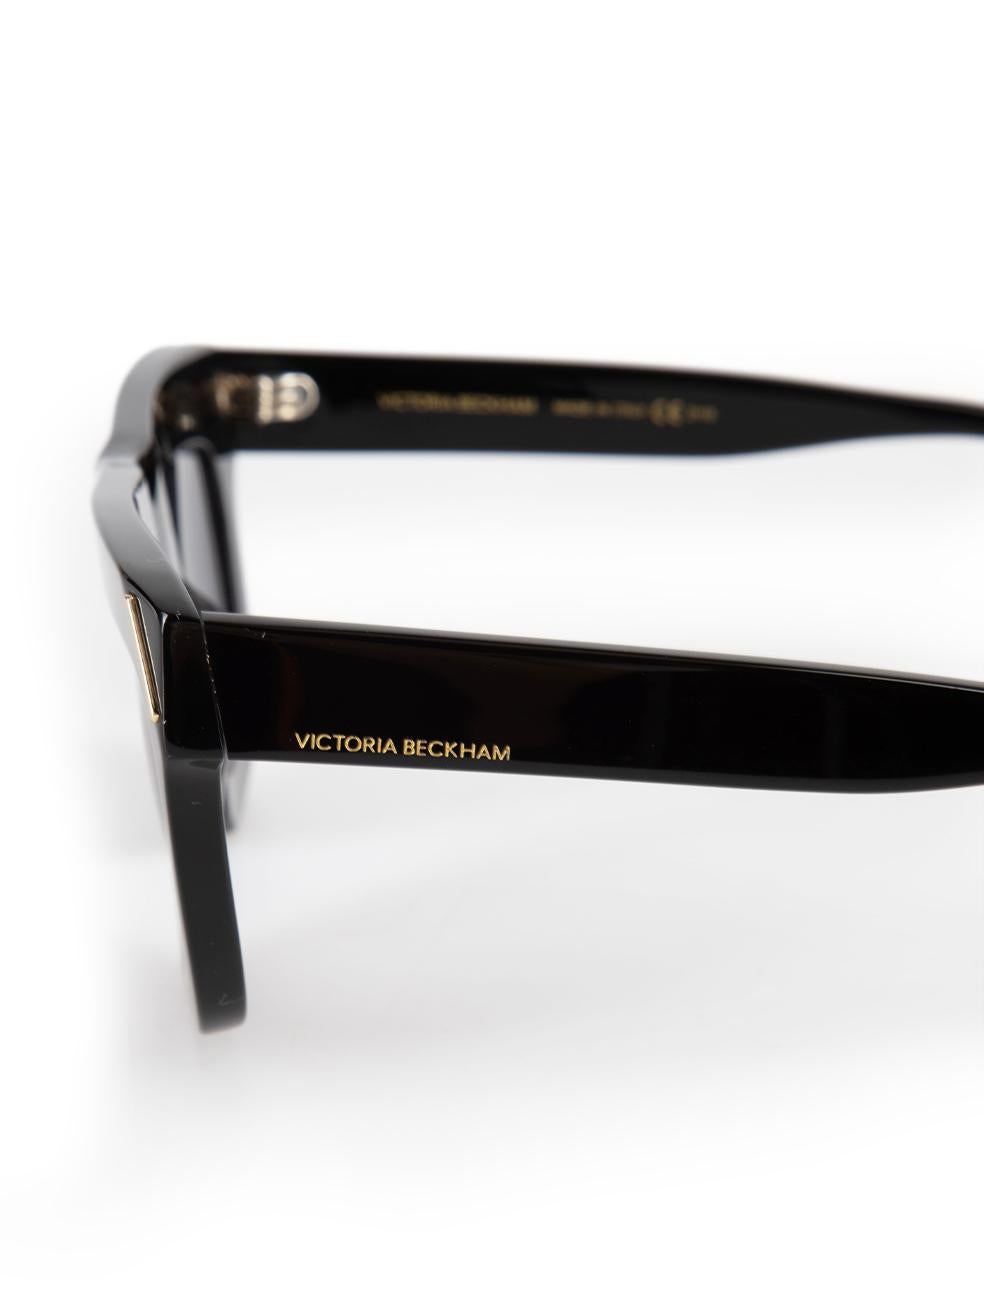 Victoria Beckham Black Browline Tinted Sunglasses For Sale 3